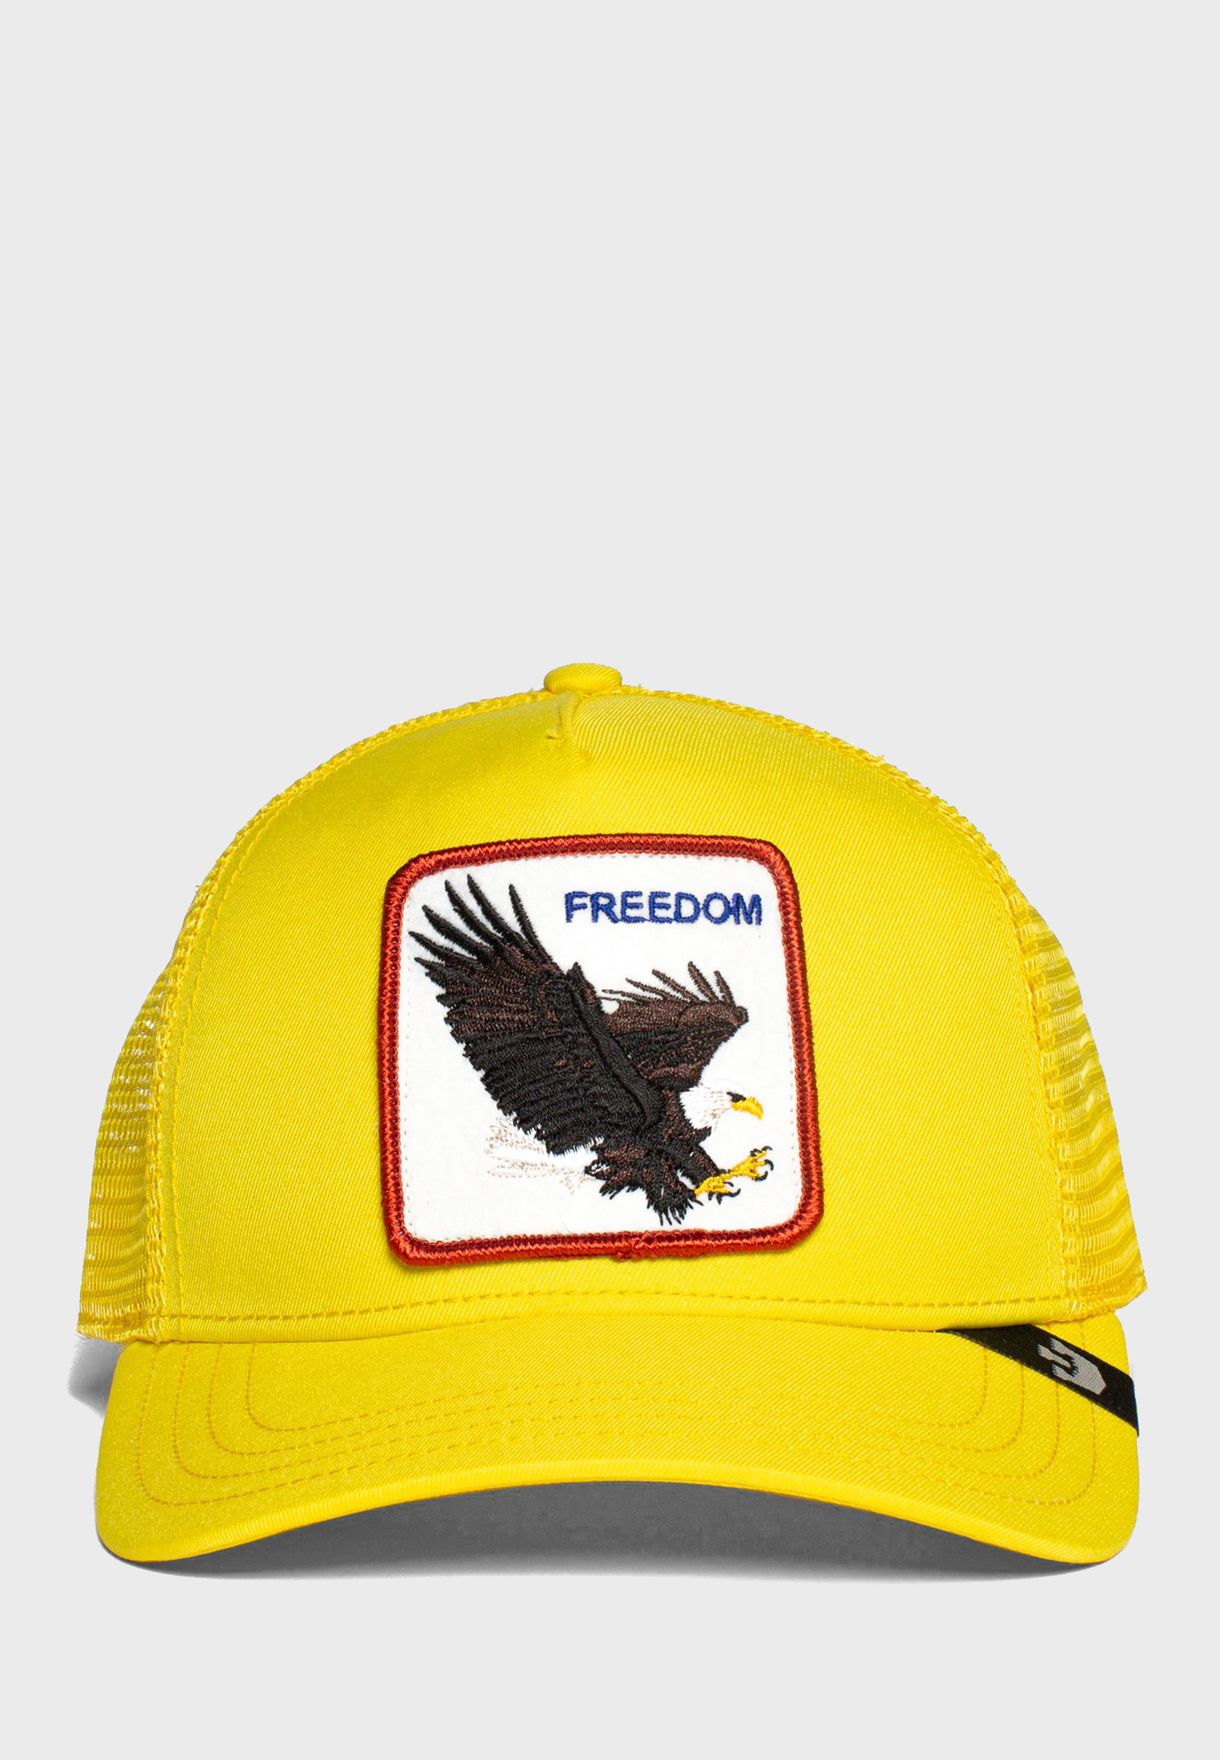 The Freedom Eagle Curved Peak Cap